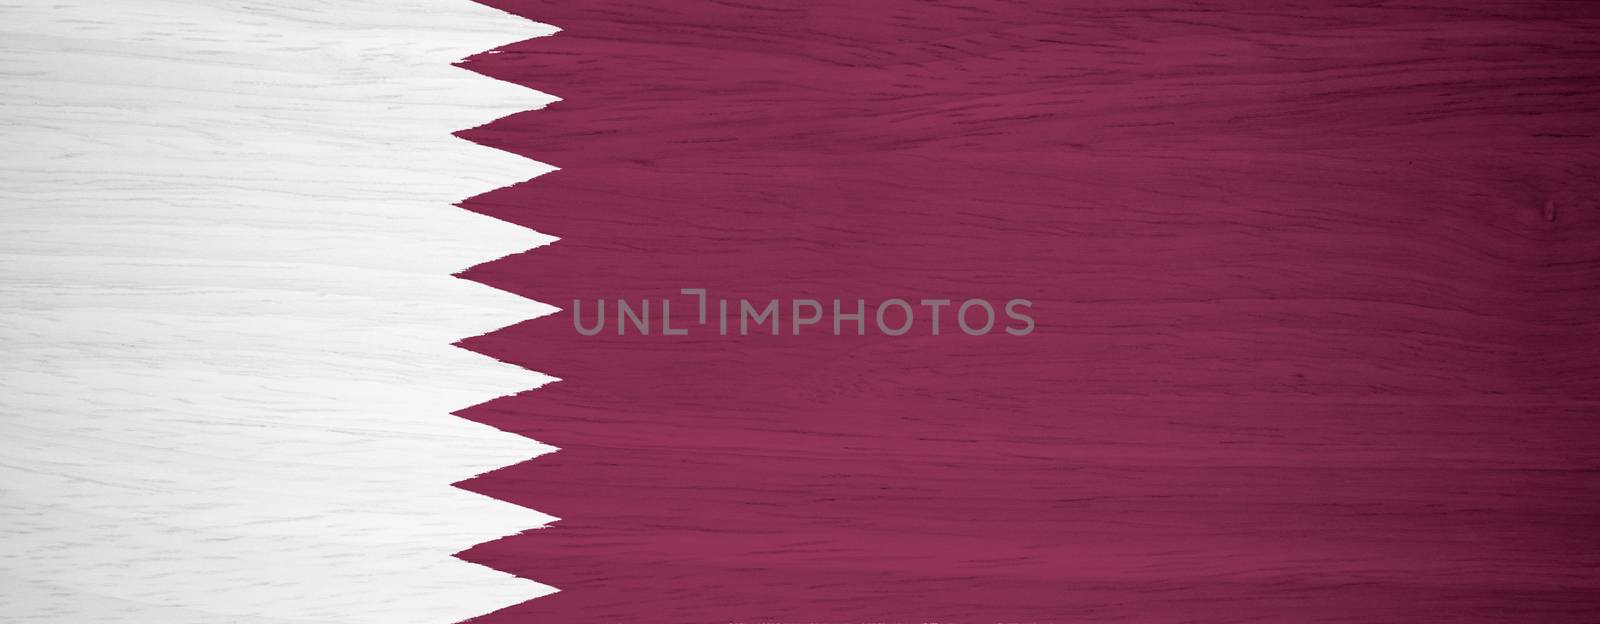 Qatar flag on wood texture by pinkblue